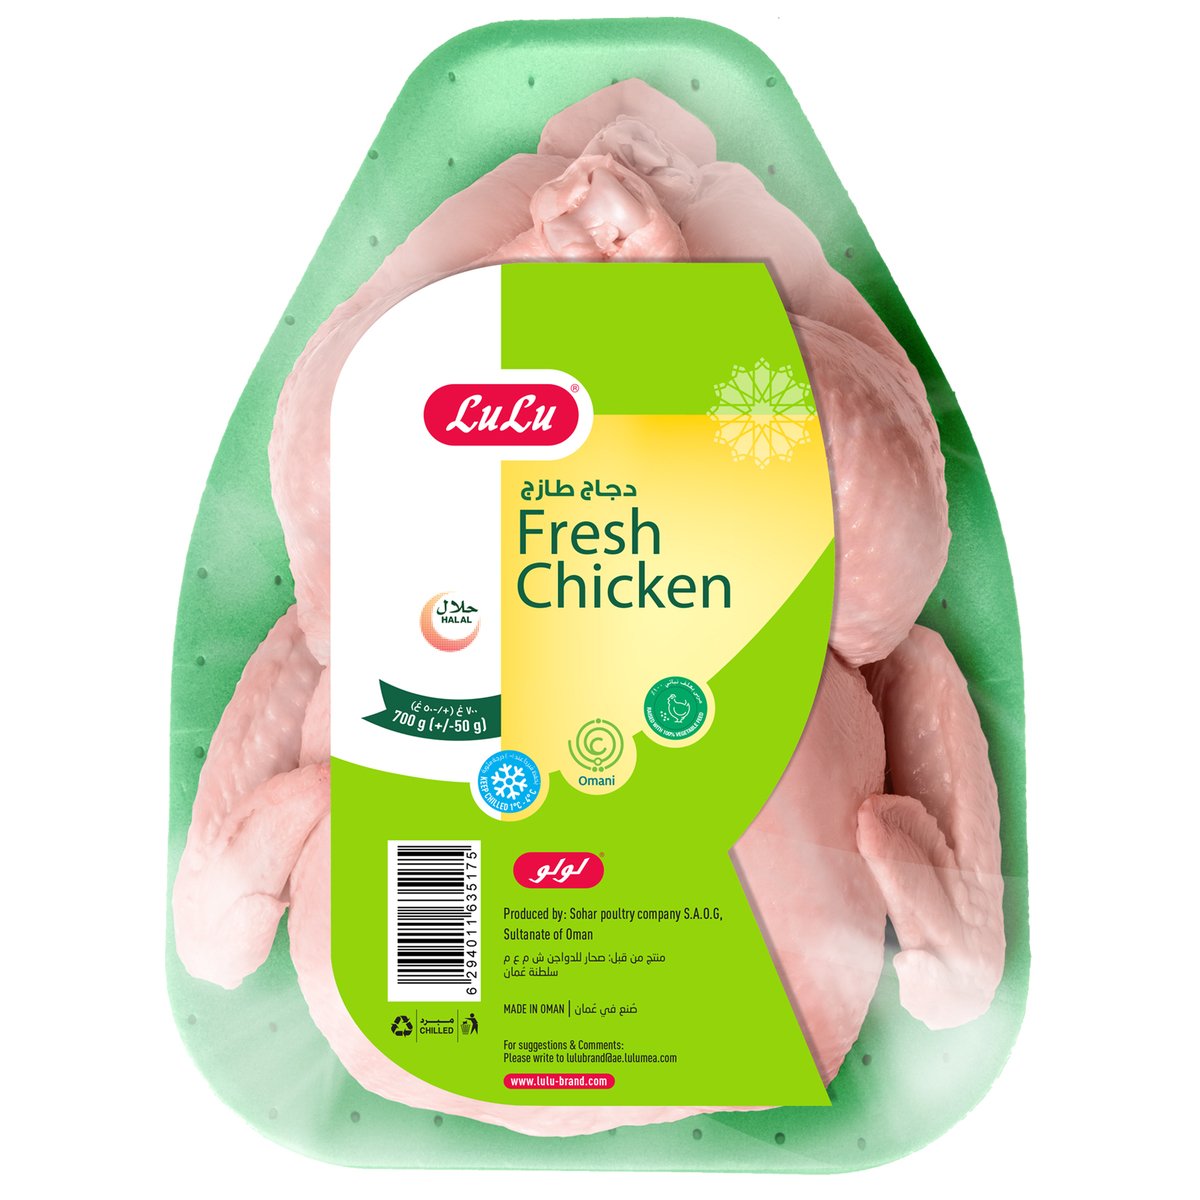 LuLu Fresh Whole Chicken 700 g